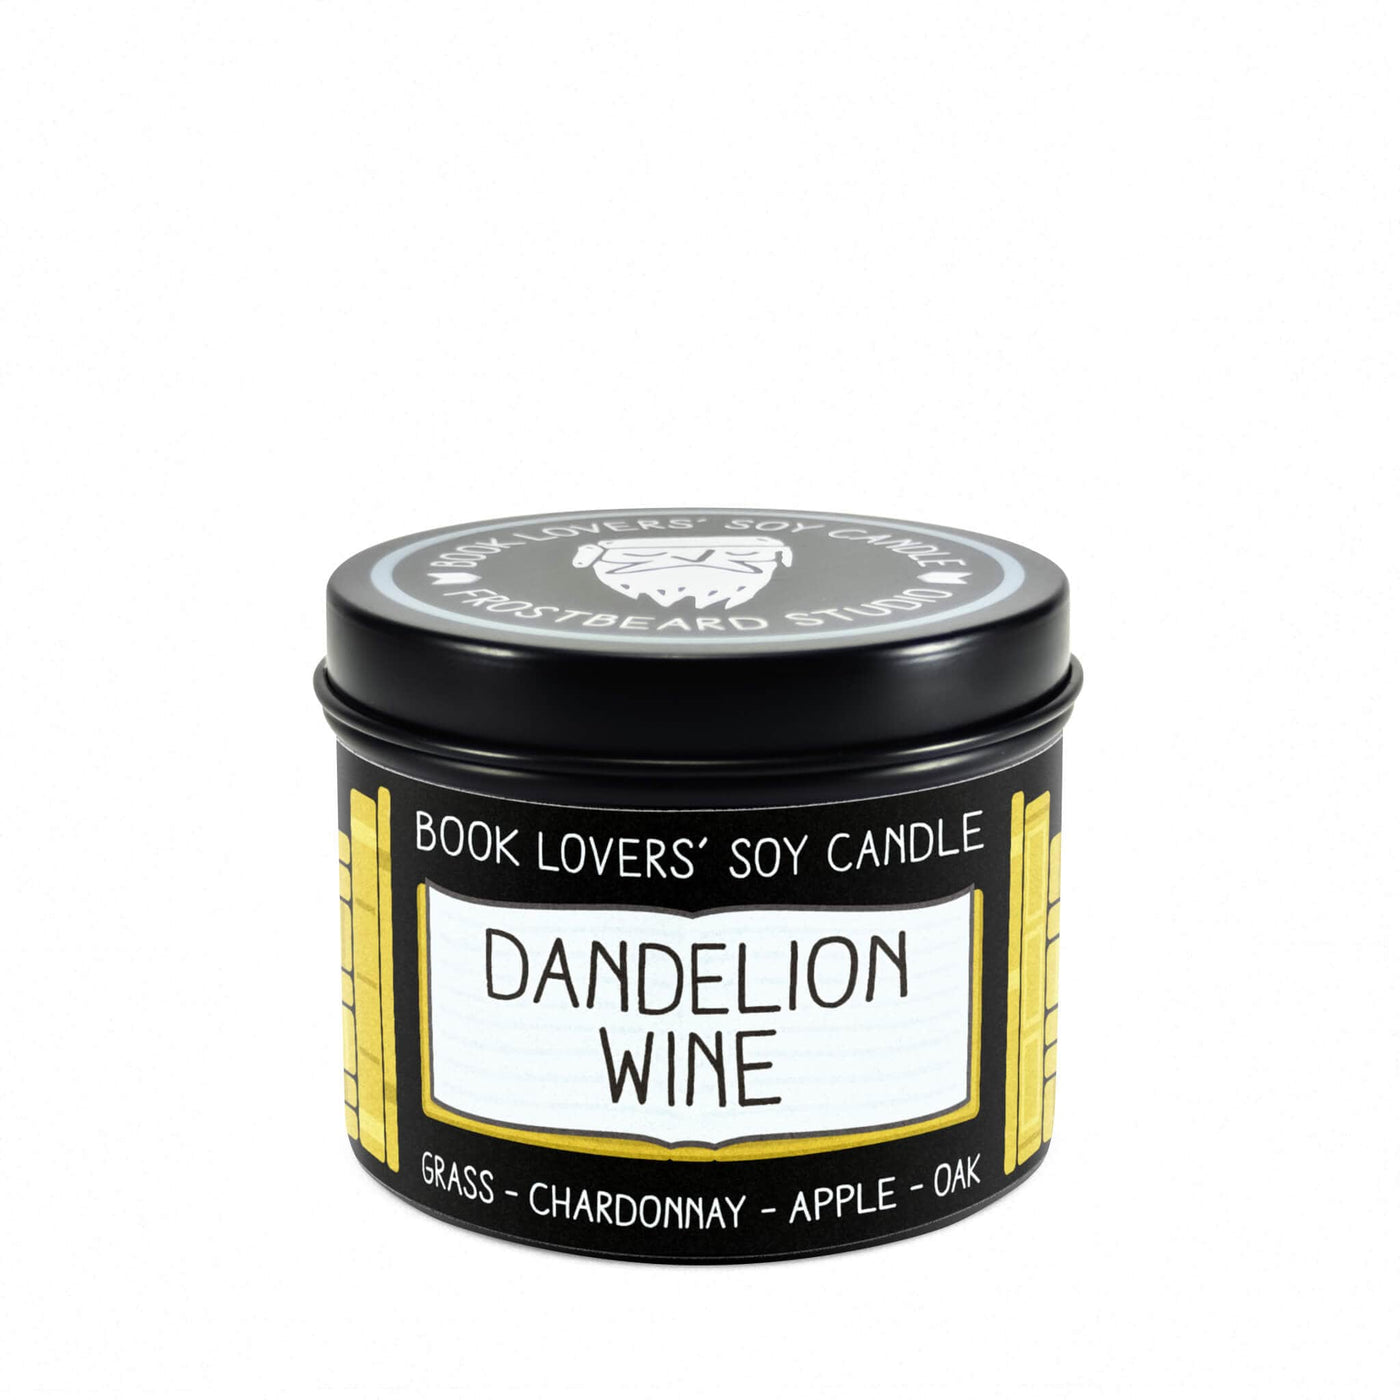 Dandelion Wine  -  4 oz Tin  -  Book Lovers' Soy Candle  -  Frostbeard Studio